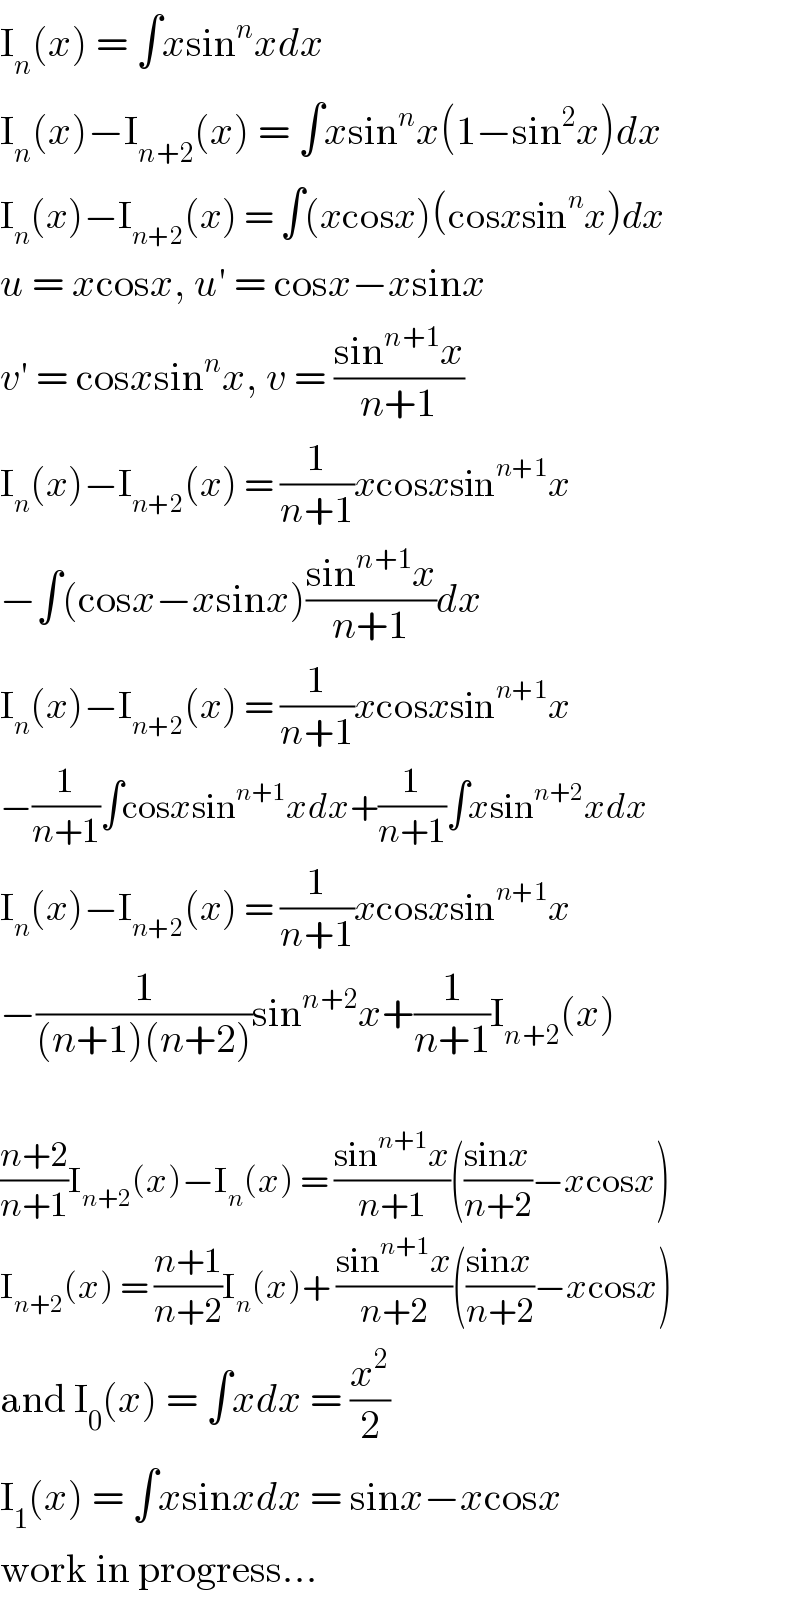 I_n (x) = ∫xsin^n xdx  I_n (x)−I_(n+2) (x) = ∫xsin^n x(1−sin^2 x)dx  I_n (x)−I_(n+2) (x) = ∫(xcosx)(cosxsin^n x)dx  u = xcosx, u′ = cosx−xsinx  v′ = cosxsin^n x, v = ((sin^(n+1) x)/(n+1))  I_n (x)−I_(n+2) (x) = (1/(n+1))xcosxsin^(n+1) x  −∫(cosx−xsinx)((sin^(n+1) x)/(n+1))dx  I_n (x)−I_(n+2) (x) = (1/(n+1))xcosxsin^(n+1) x  −(1/(n+1))∫cosxsin^(n+1) xdx+(1/(n+1))∫xsin^(n+2) xdx  I_n (x)−I_(n+2) (x) = (1/(n+1))xcosxsin^(n+1) x  −(1/((n+1)(n+2)))sin^(n+2) x+(1/(n+1))I_(n+2) (x)    ((n+2)/(n+1))I_(n+2) (x)−I_n (x) = ((sin^(n+1) x)/(n+1))(((sinx)/(n+2))−xcosx)  I_(n+2) (x) = ((n+1)/(n+2))I_n (x)+ ((sin^(n+1) x)/(n+2))(((sinx)/(n+2))−xcosx)  and I_0 (x) = ∫xdx = (x^2 /2)  I_1 (x) = ∫xsinxdx = sinx−xcosx  work in progress...  